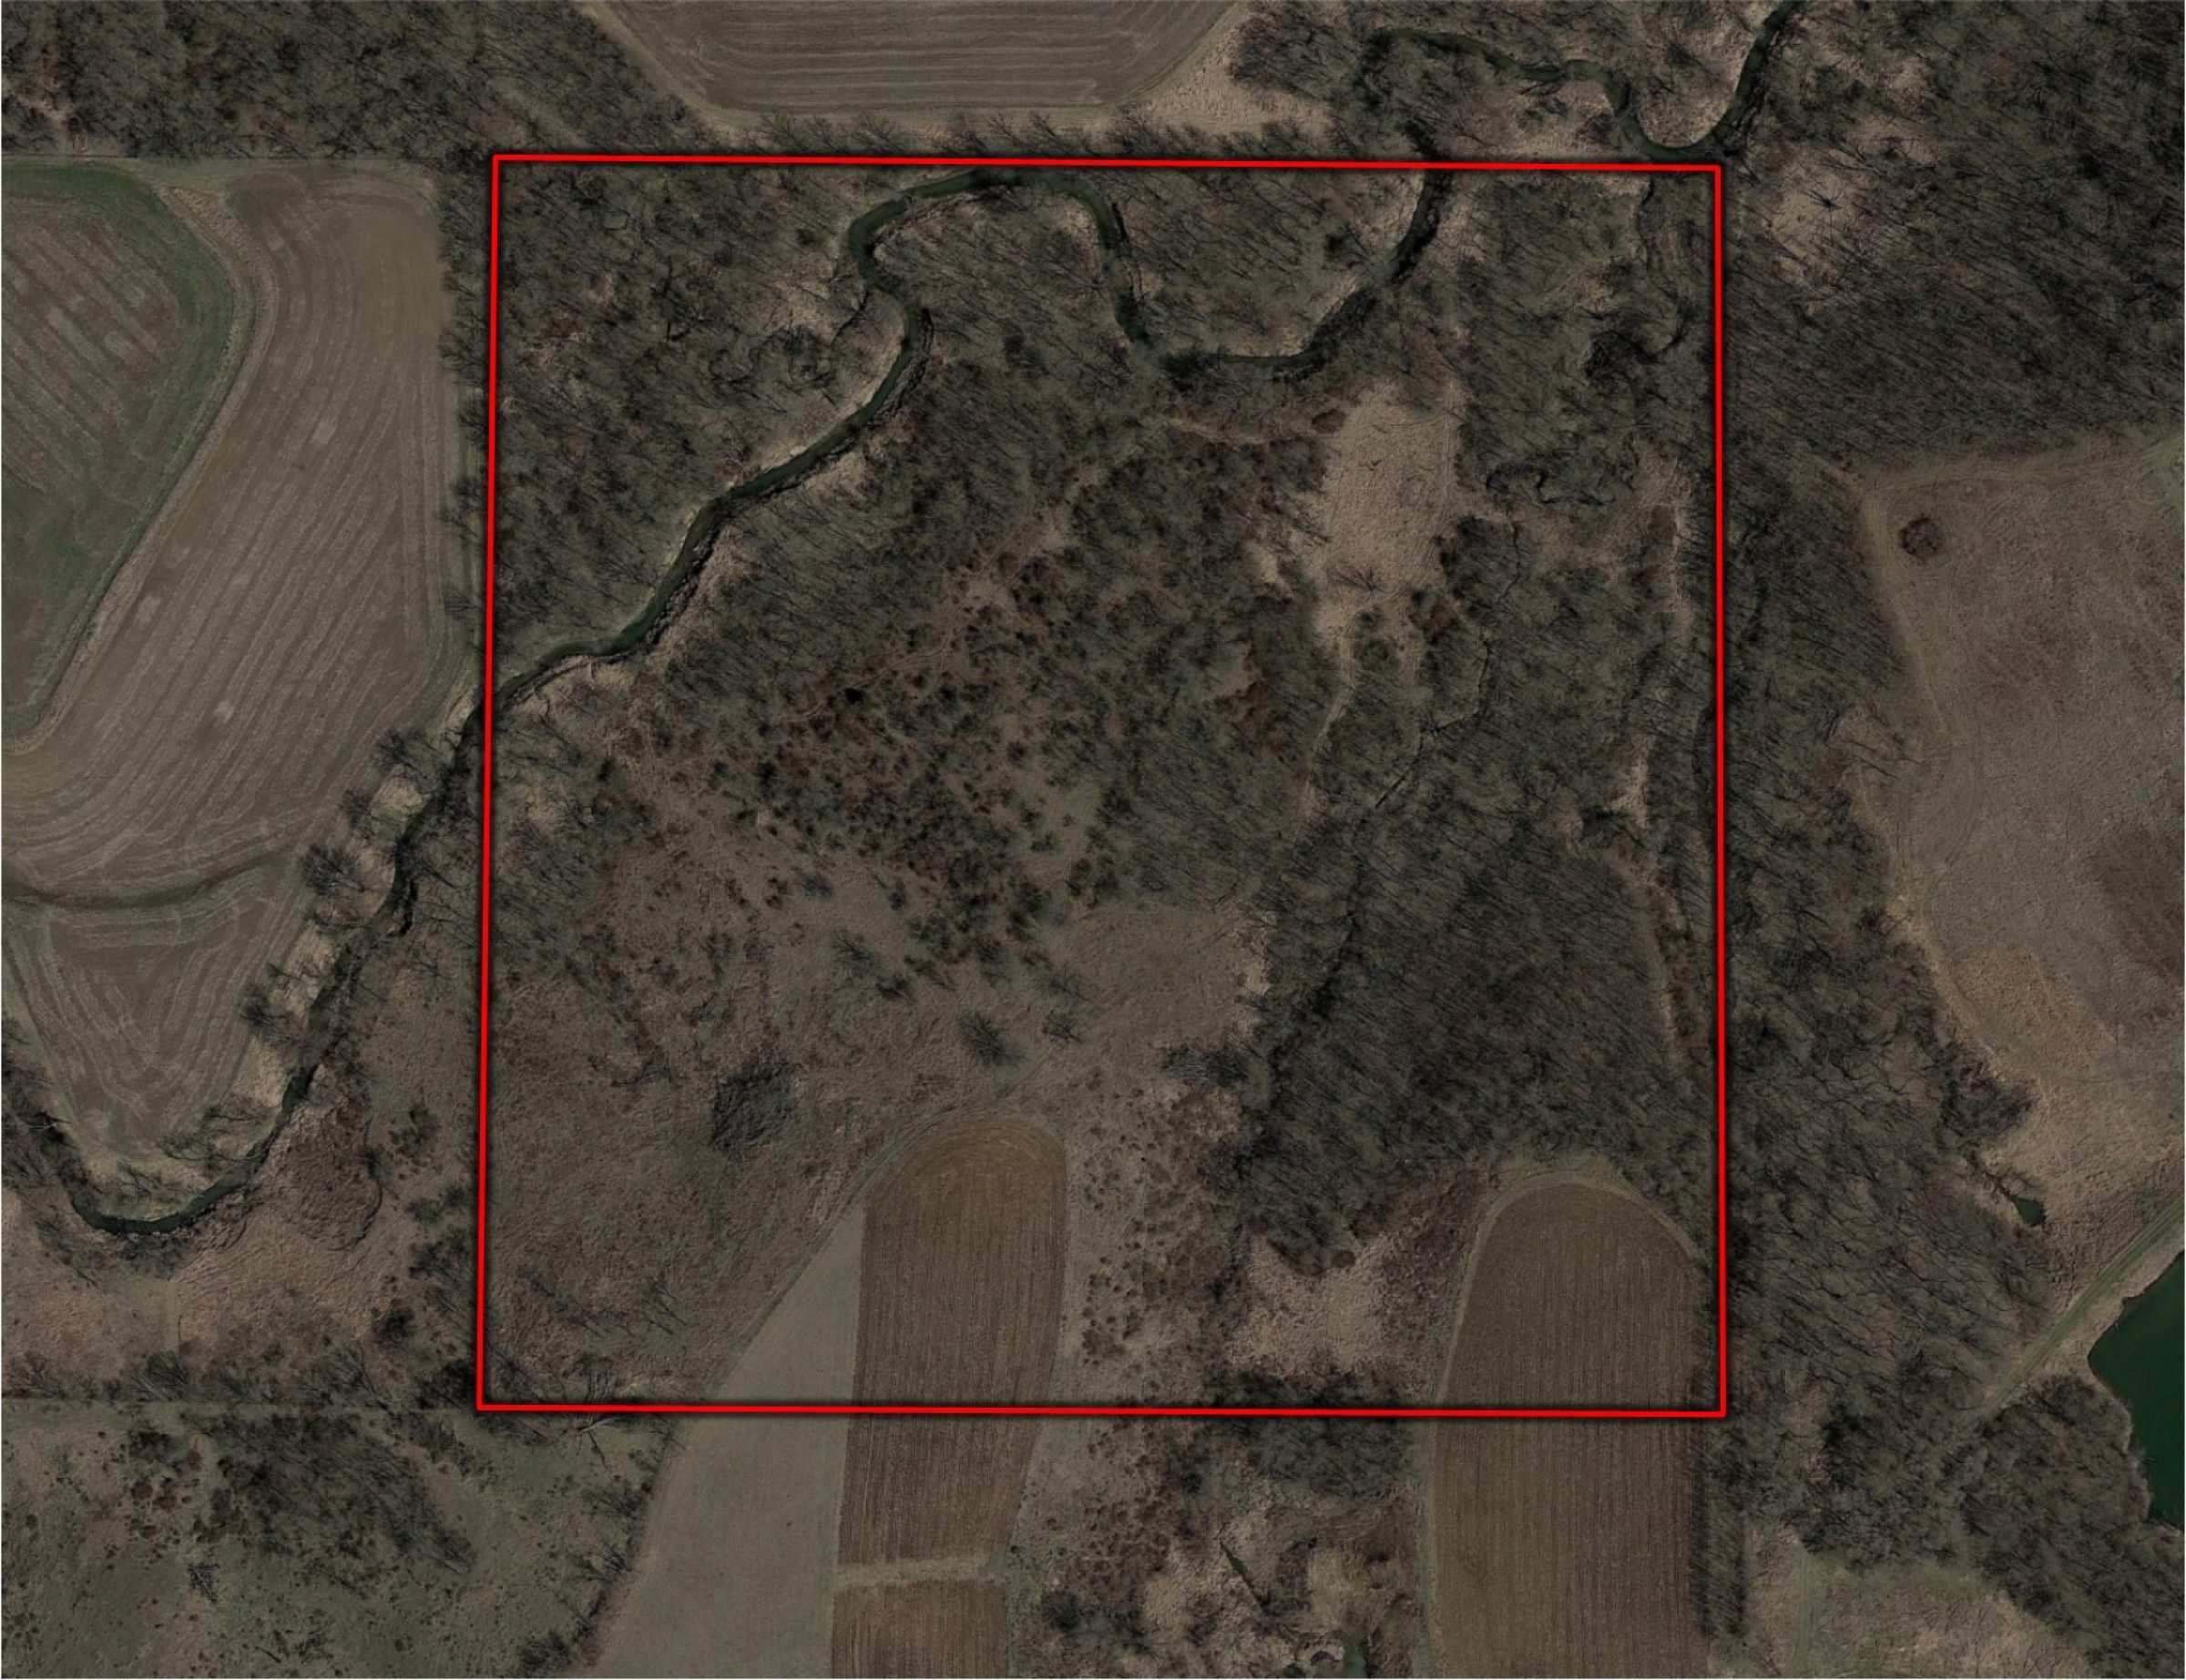 Peoples Company Recreational Land for Sale Warren County IA - 220th Ave. Milo, IA 50166